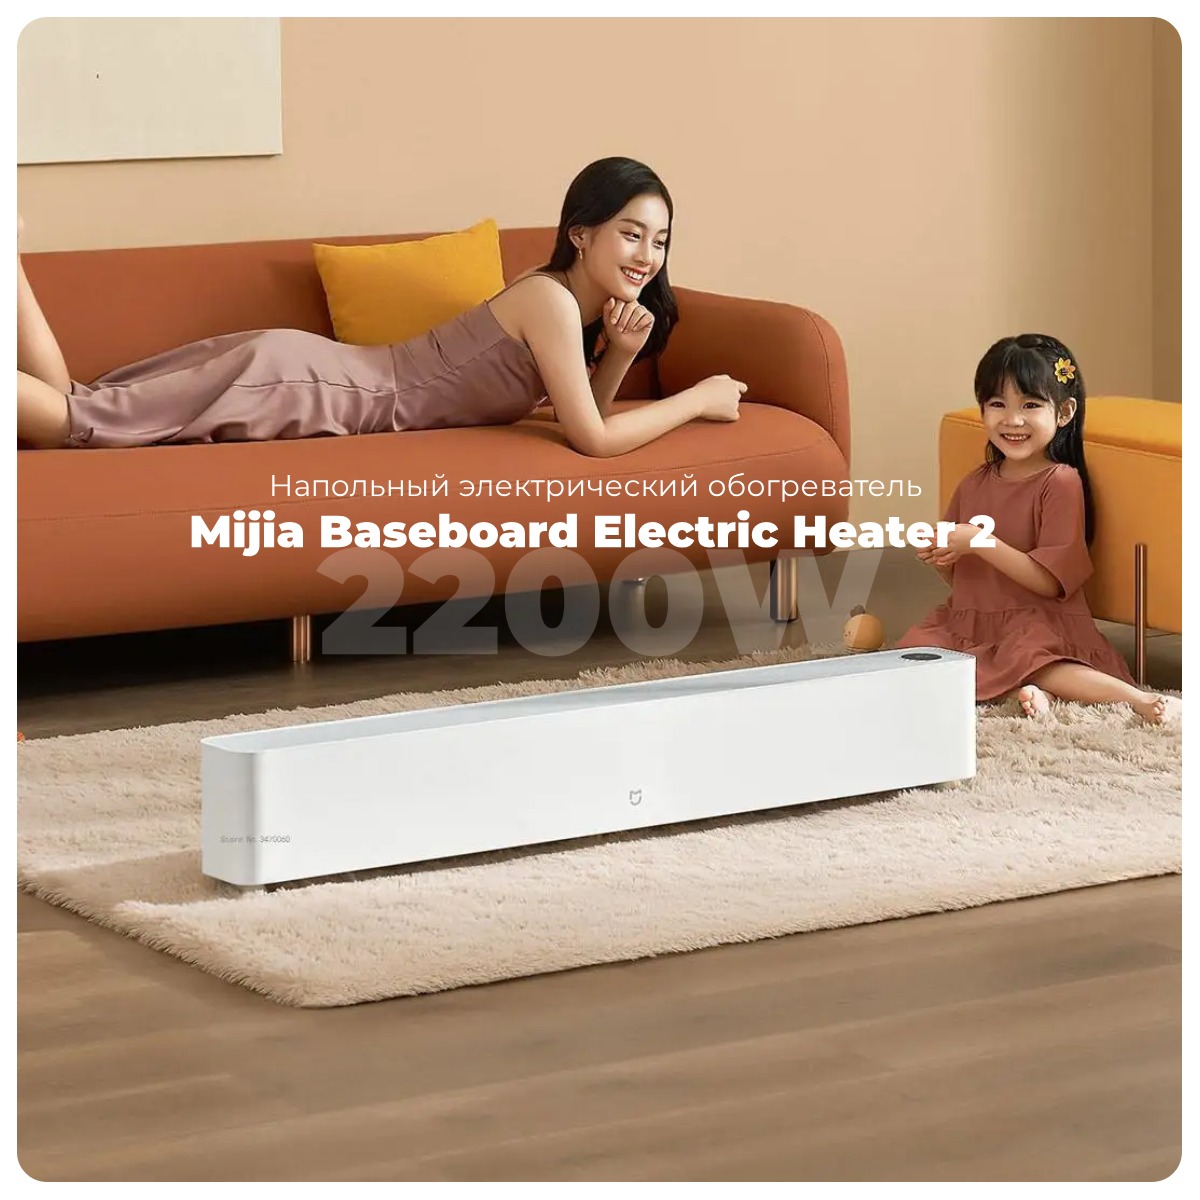 Mijia-Baseboard-Electric-Heater-2-01